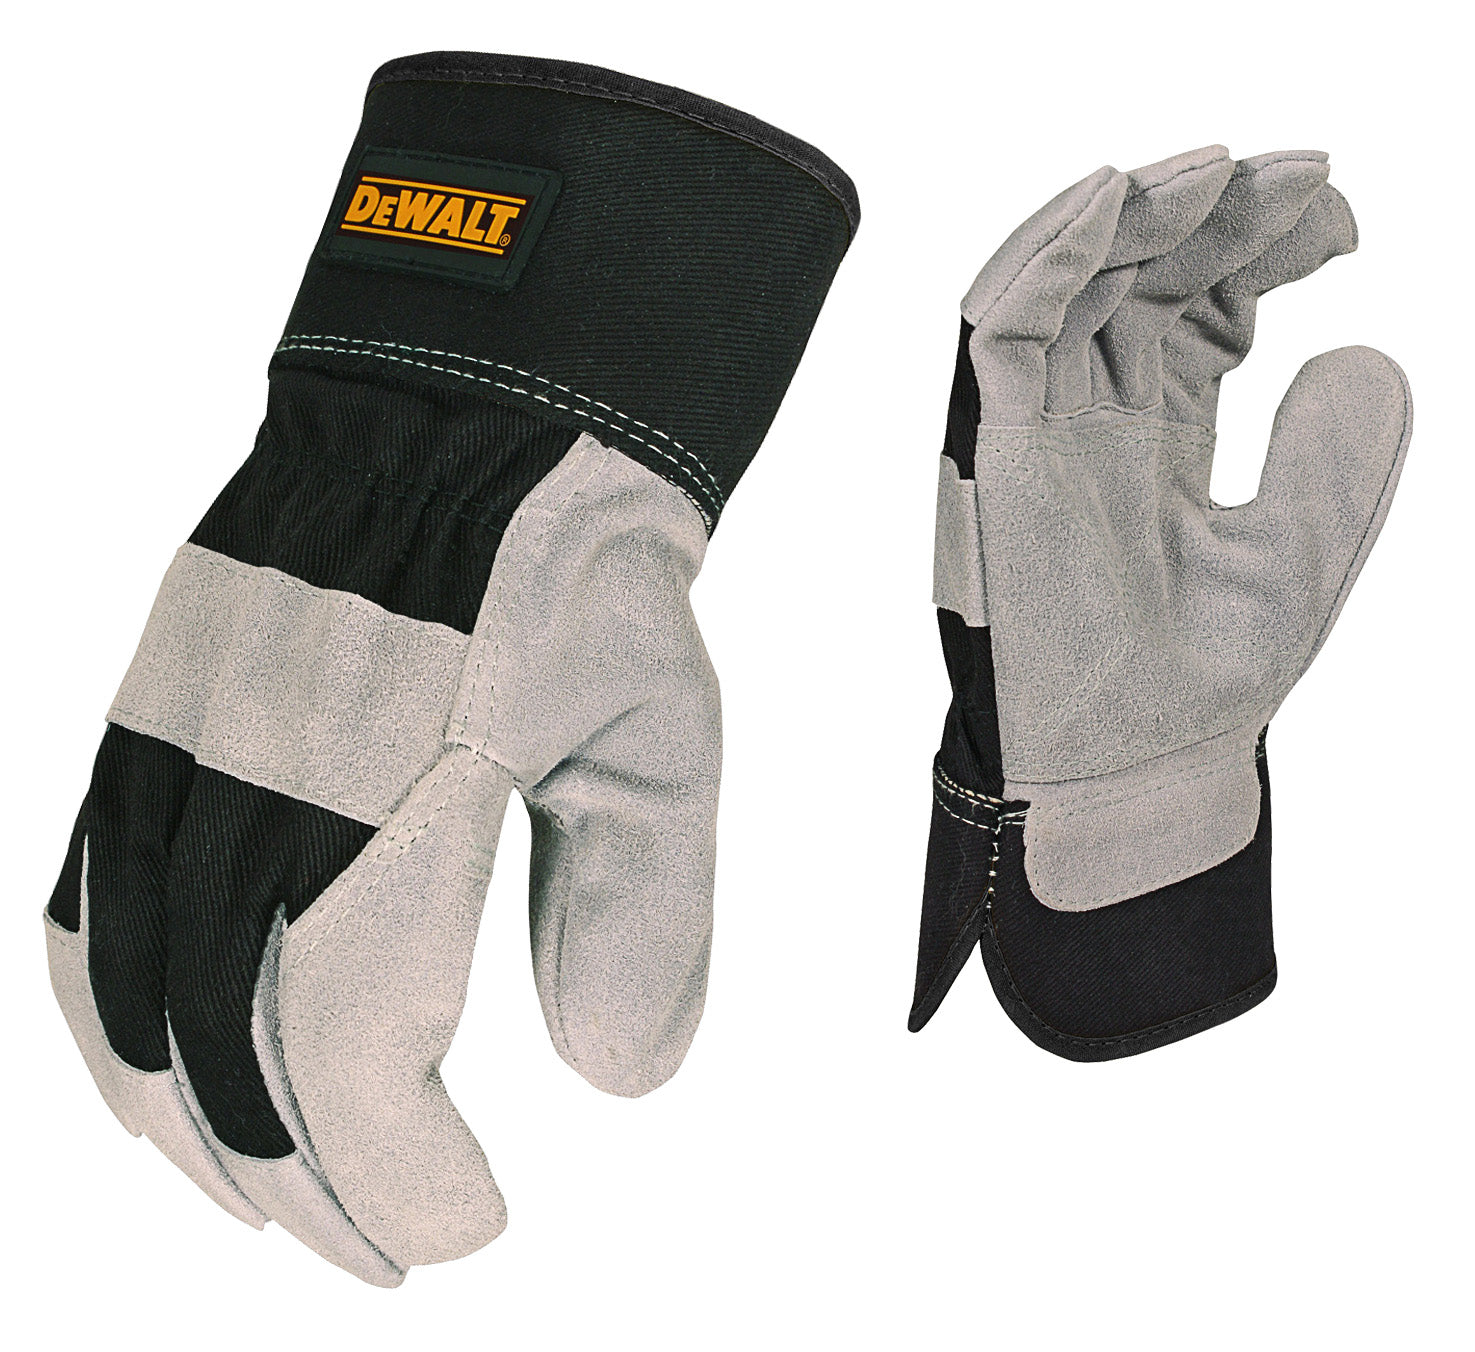 DEWALT DPG41 Select Shoulder Cowhide Leather Palm Glove - Size L - Gray and Black-eSafety Supplies, Inc